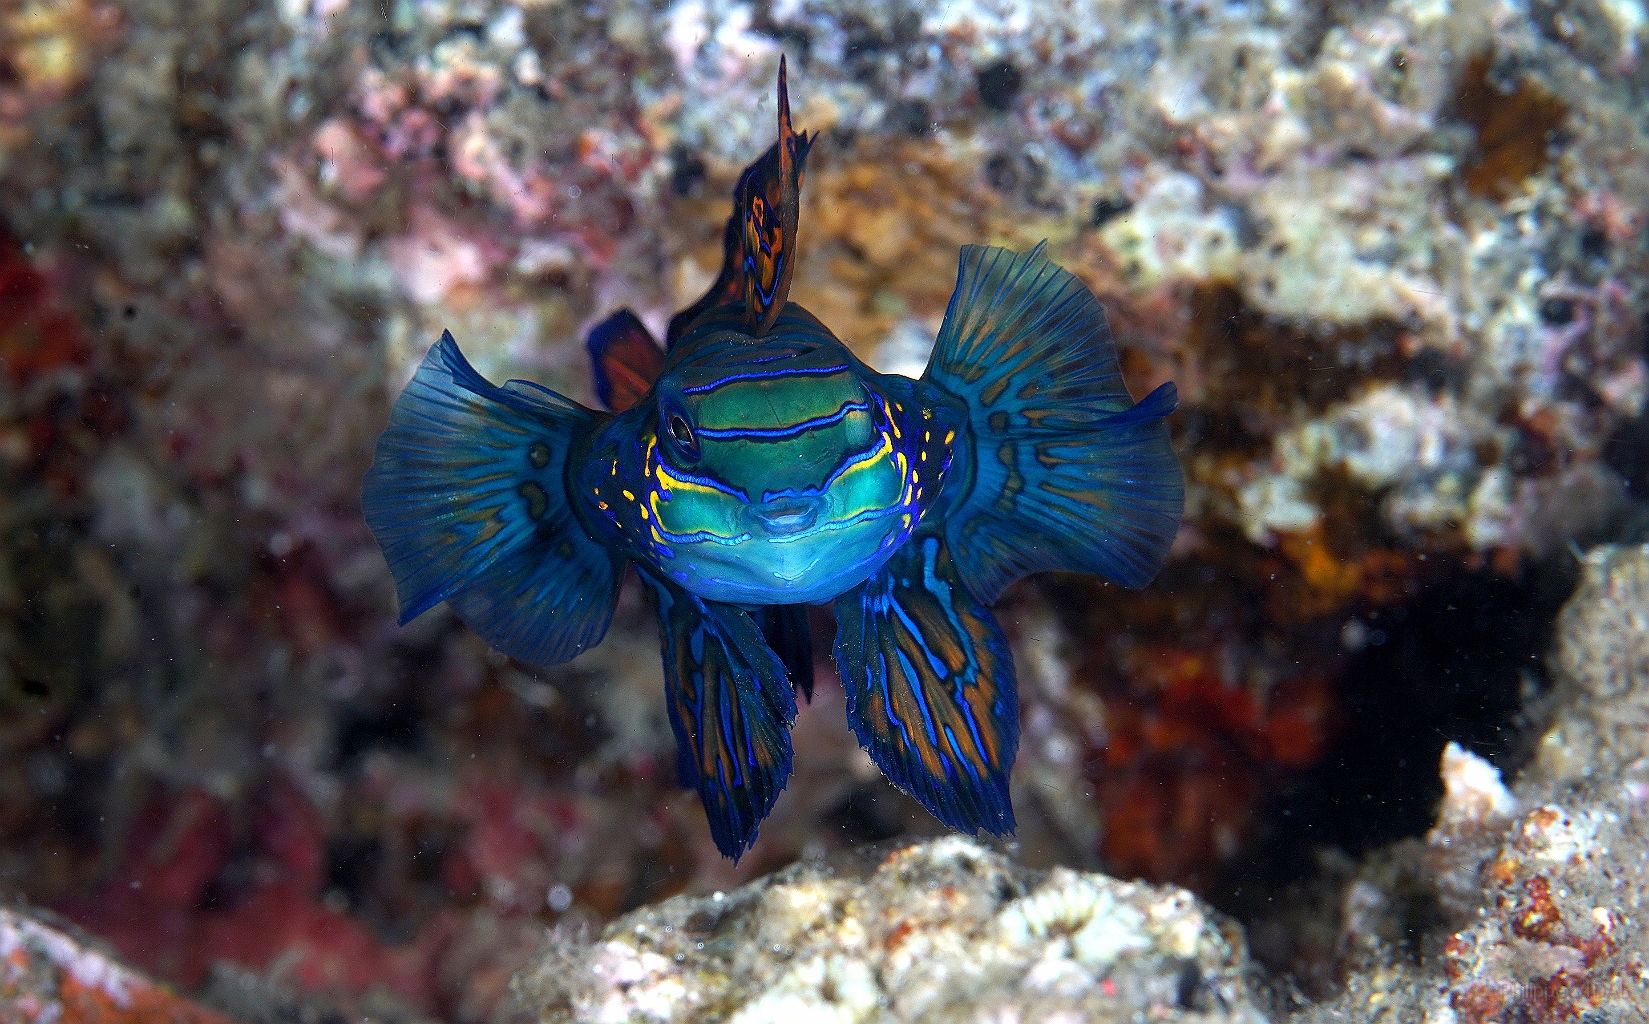 Banda Sea 2018 - DSC06060_rc - Mandarinfish - Poisson mandarin - Synchiropus splendidus.jpg